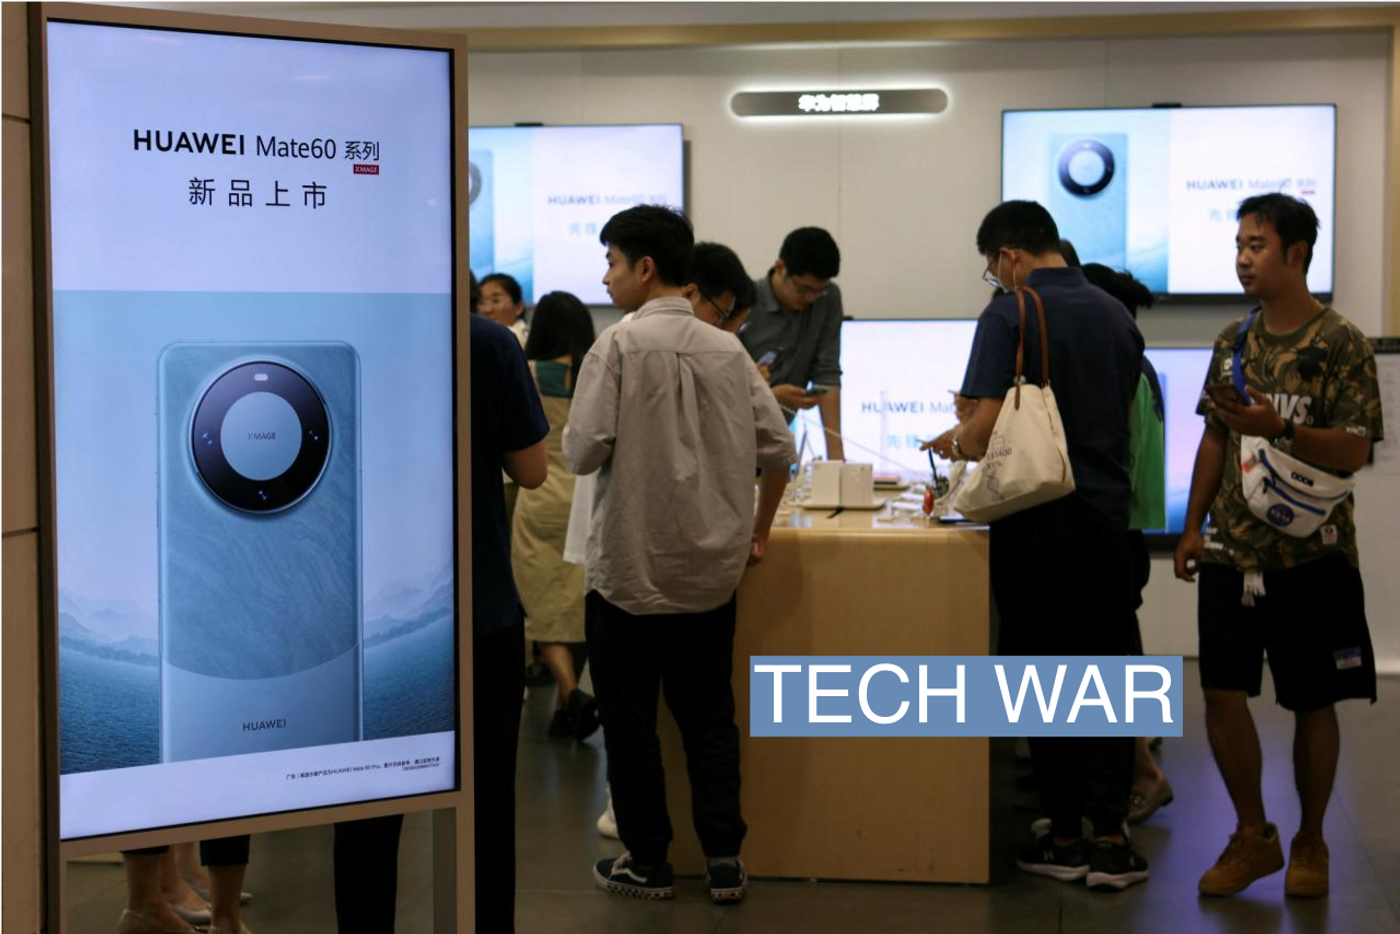 U.S. lawmakers raise alarm over new Huawei phone